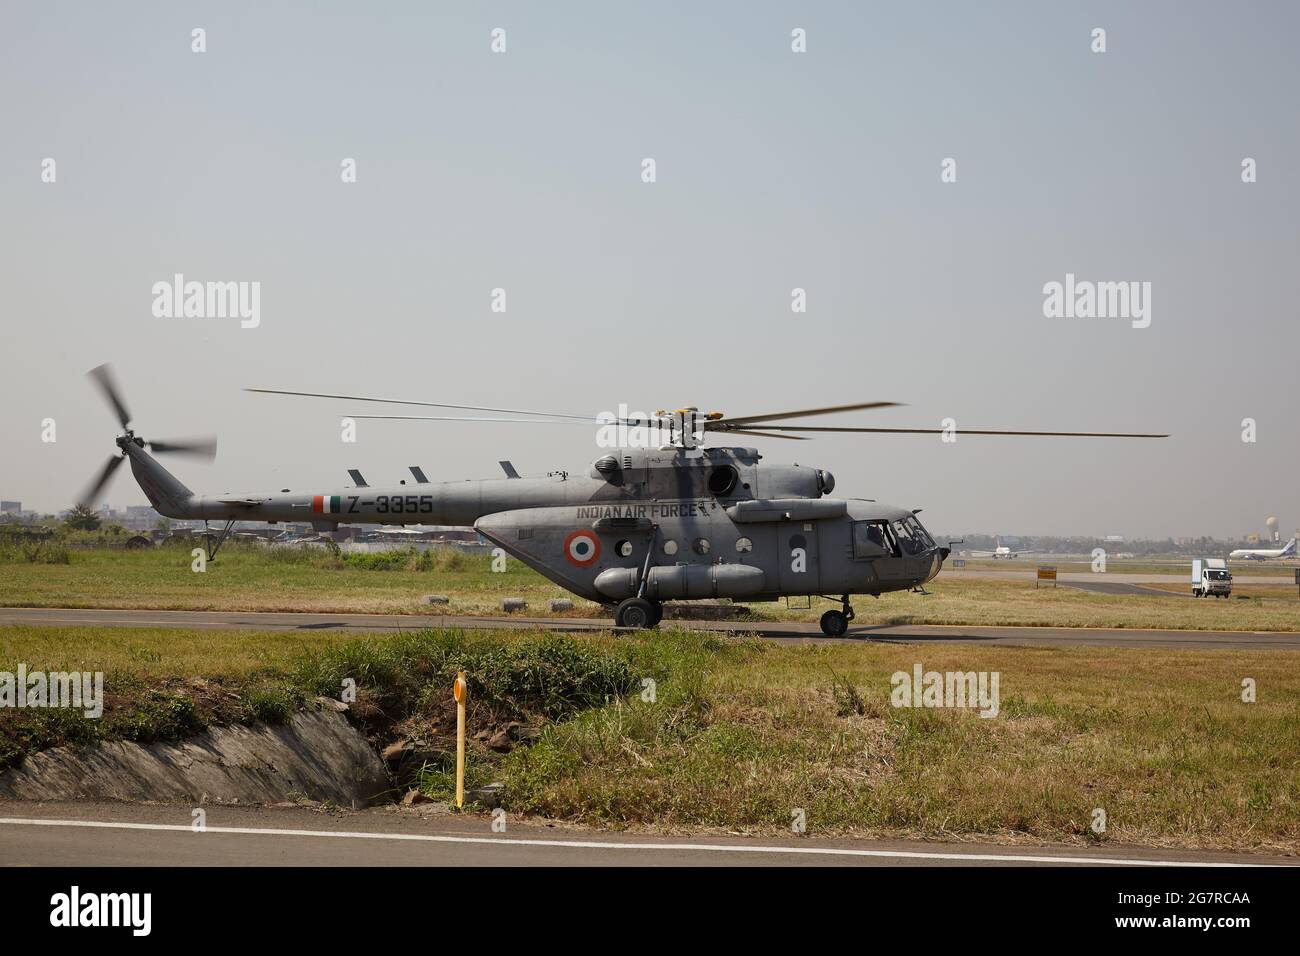 MIL Mi-8 Hubschrauber, Sowjetunion, Russland, Yelahanka Air Force Station, Flugplatz der Indian Air Force, Yelahanka, Bengaluru, Bangalore, Karnataka, Indien, Asien, Indien, Asien Stockfoto